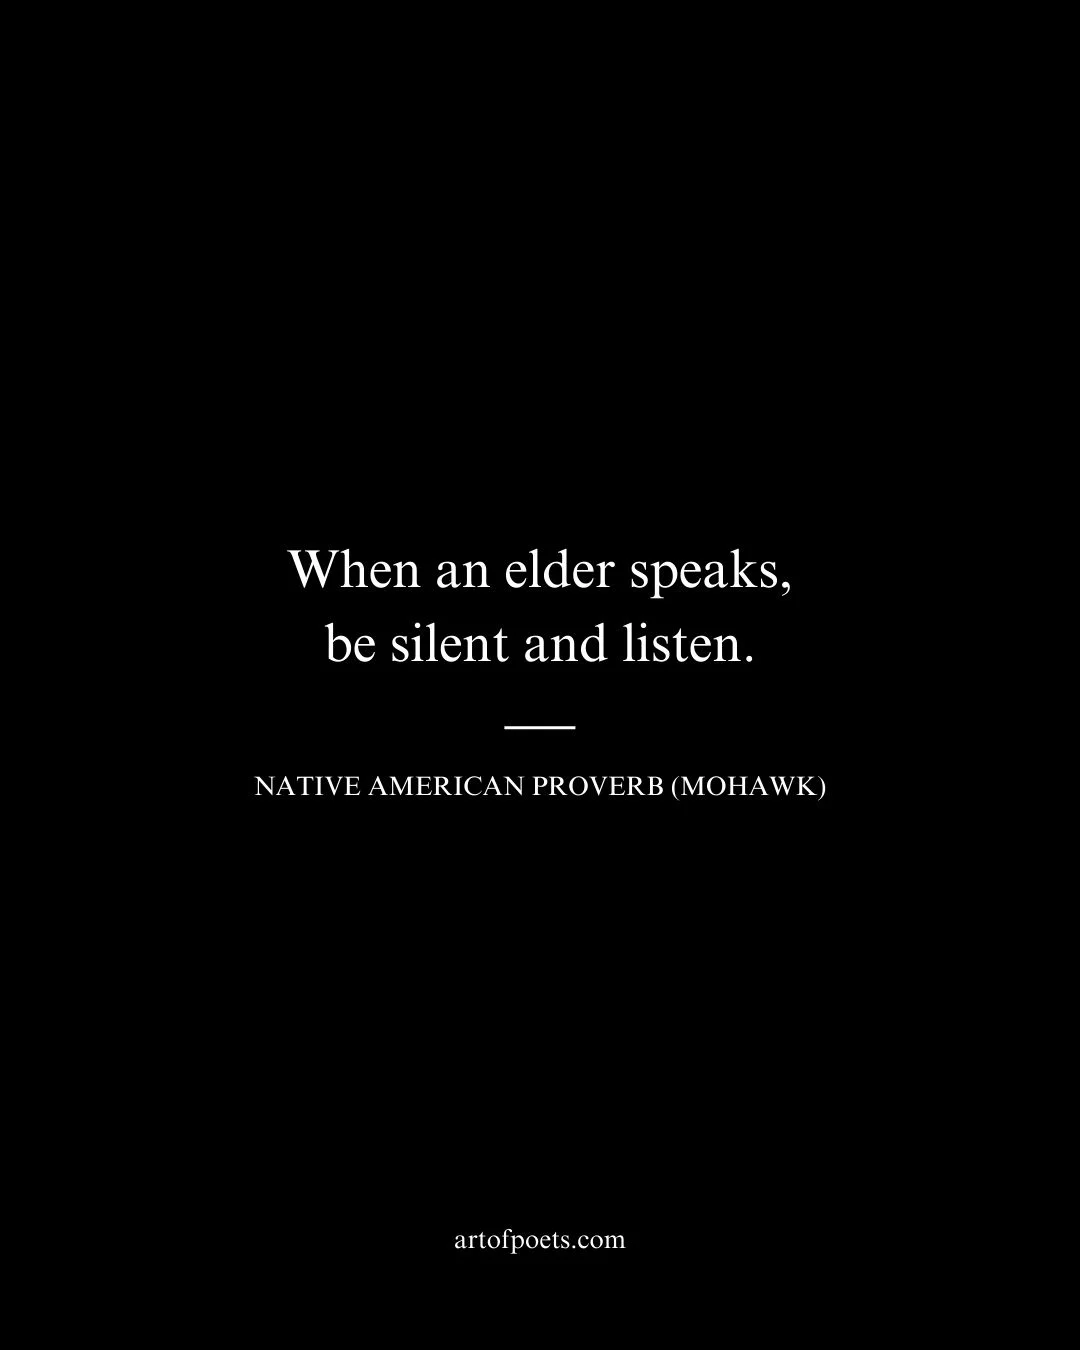 When an elder speaks be silent and listen